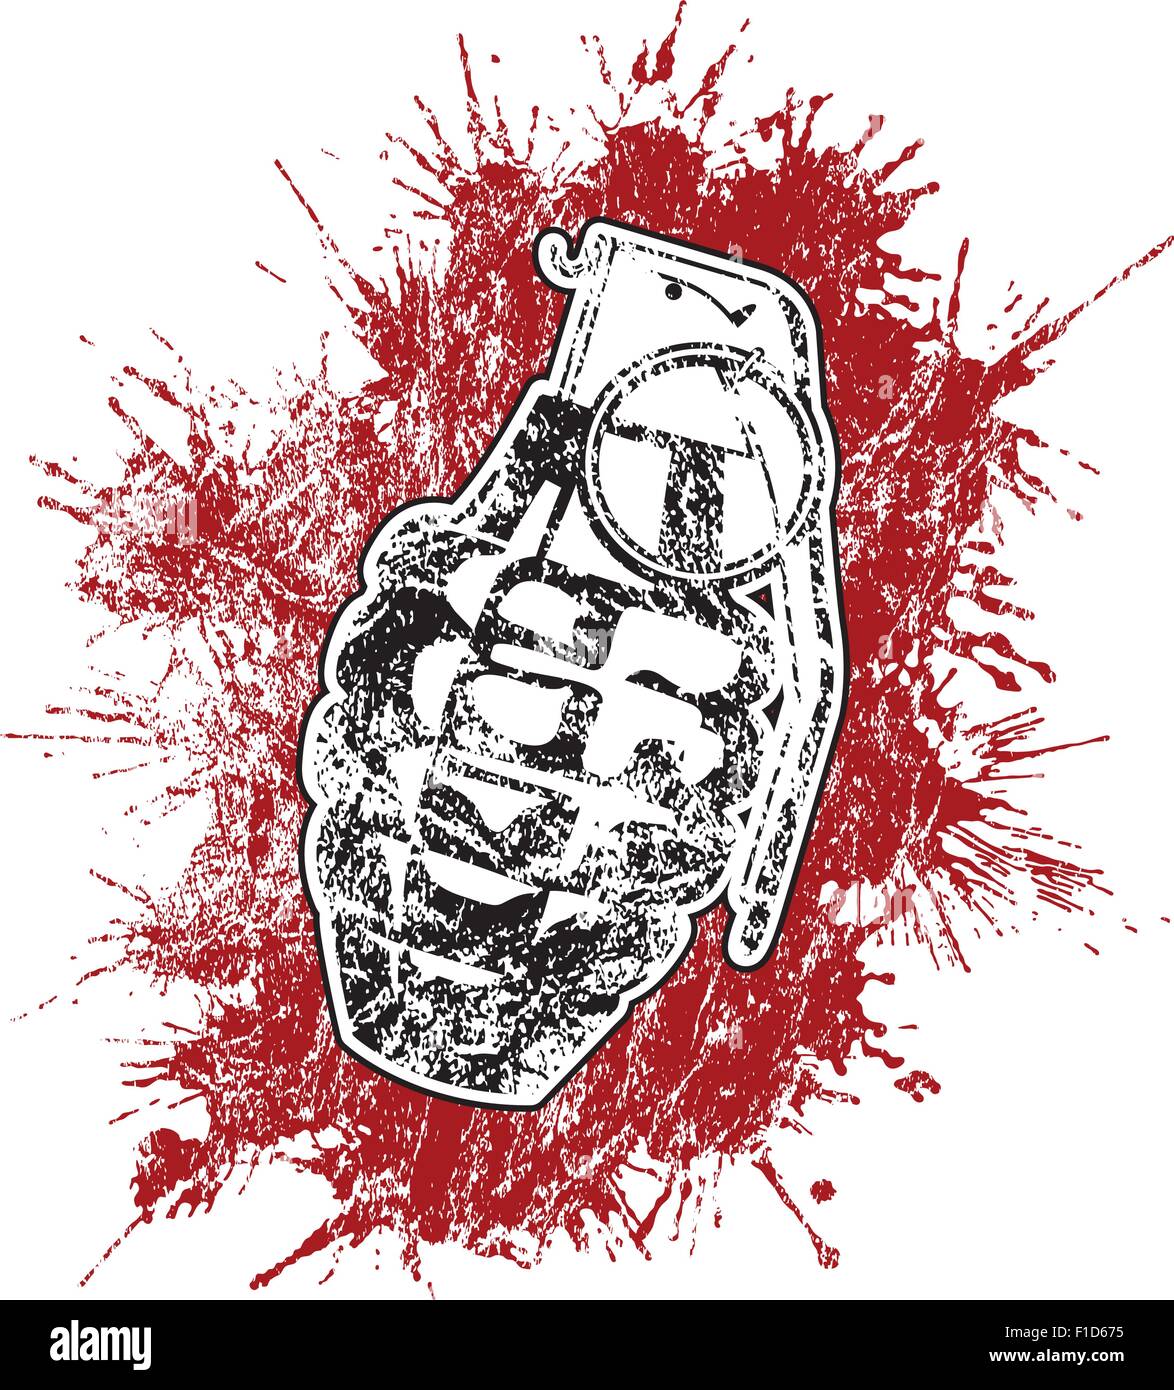 Grenade with splattered blood Stock Vector